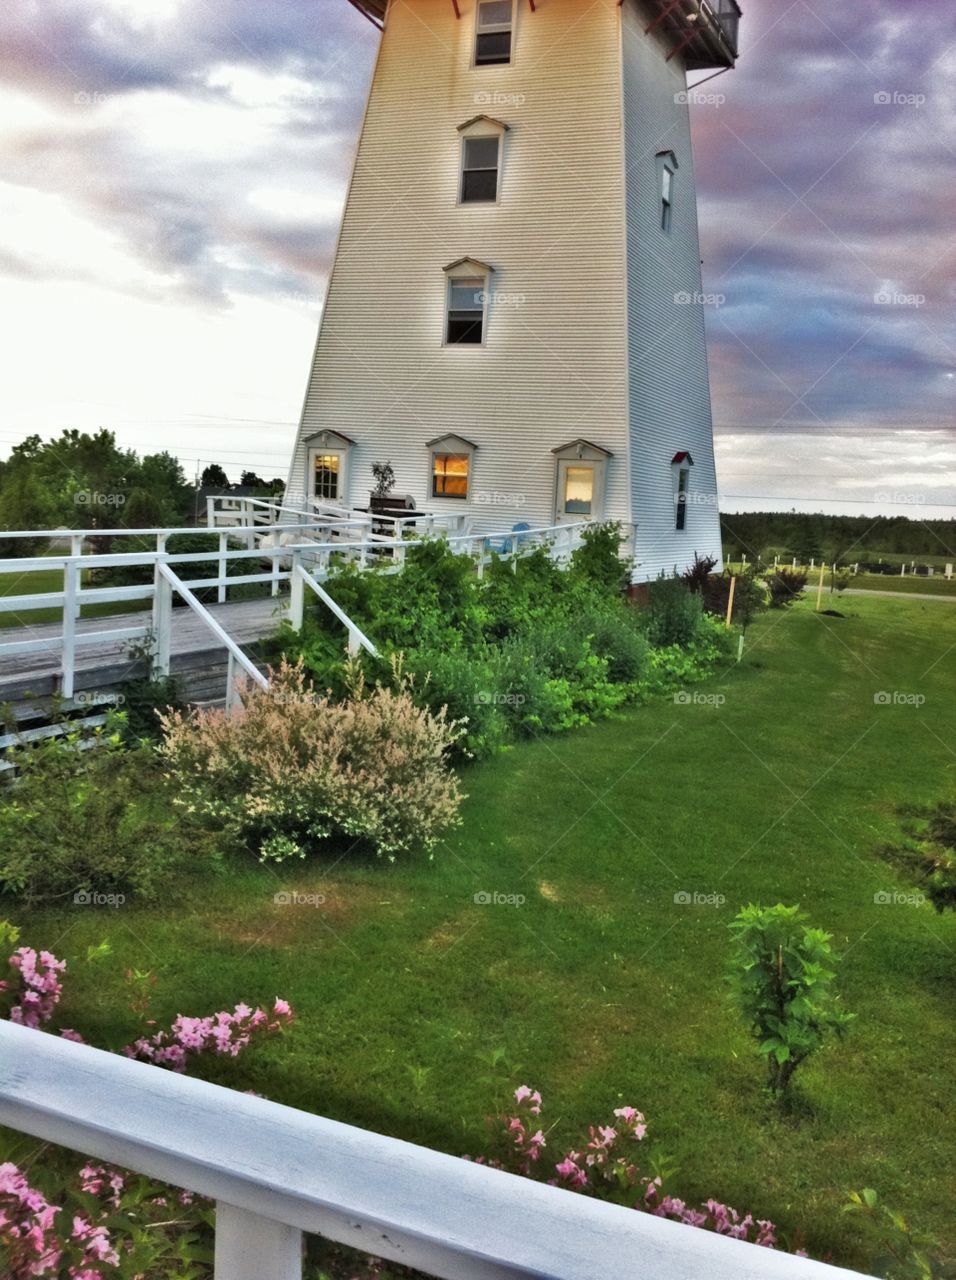 The Baywatch Lighthouse, Prince Edward Island. Old Prince Edward Island Lighthouse, Converted